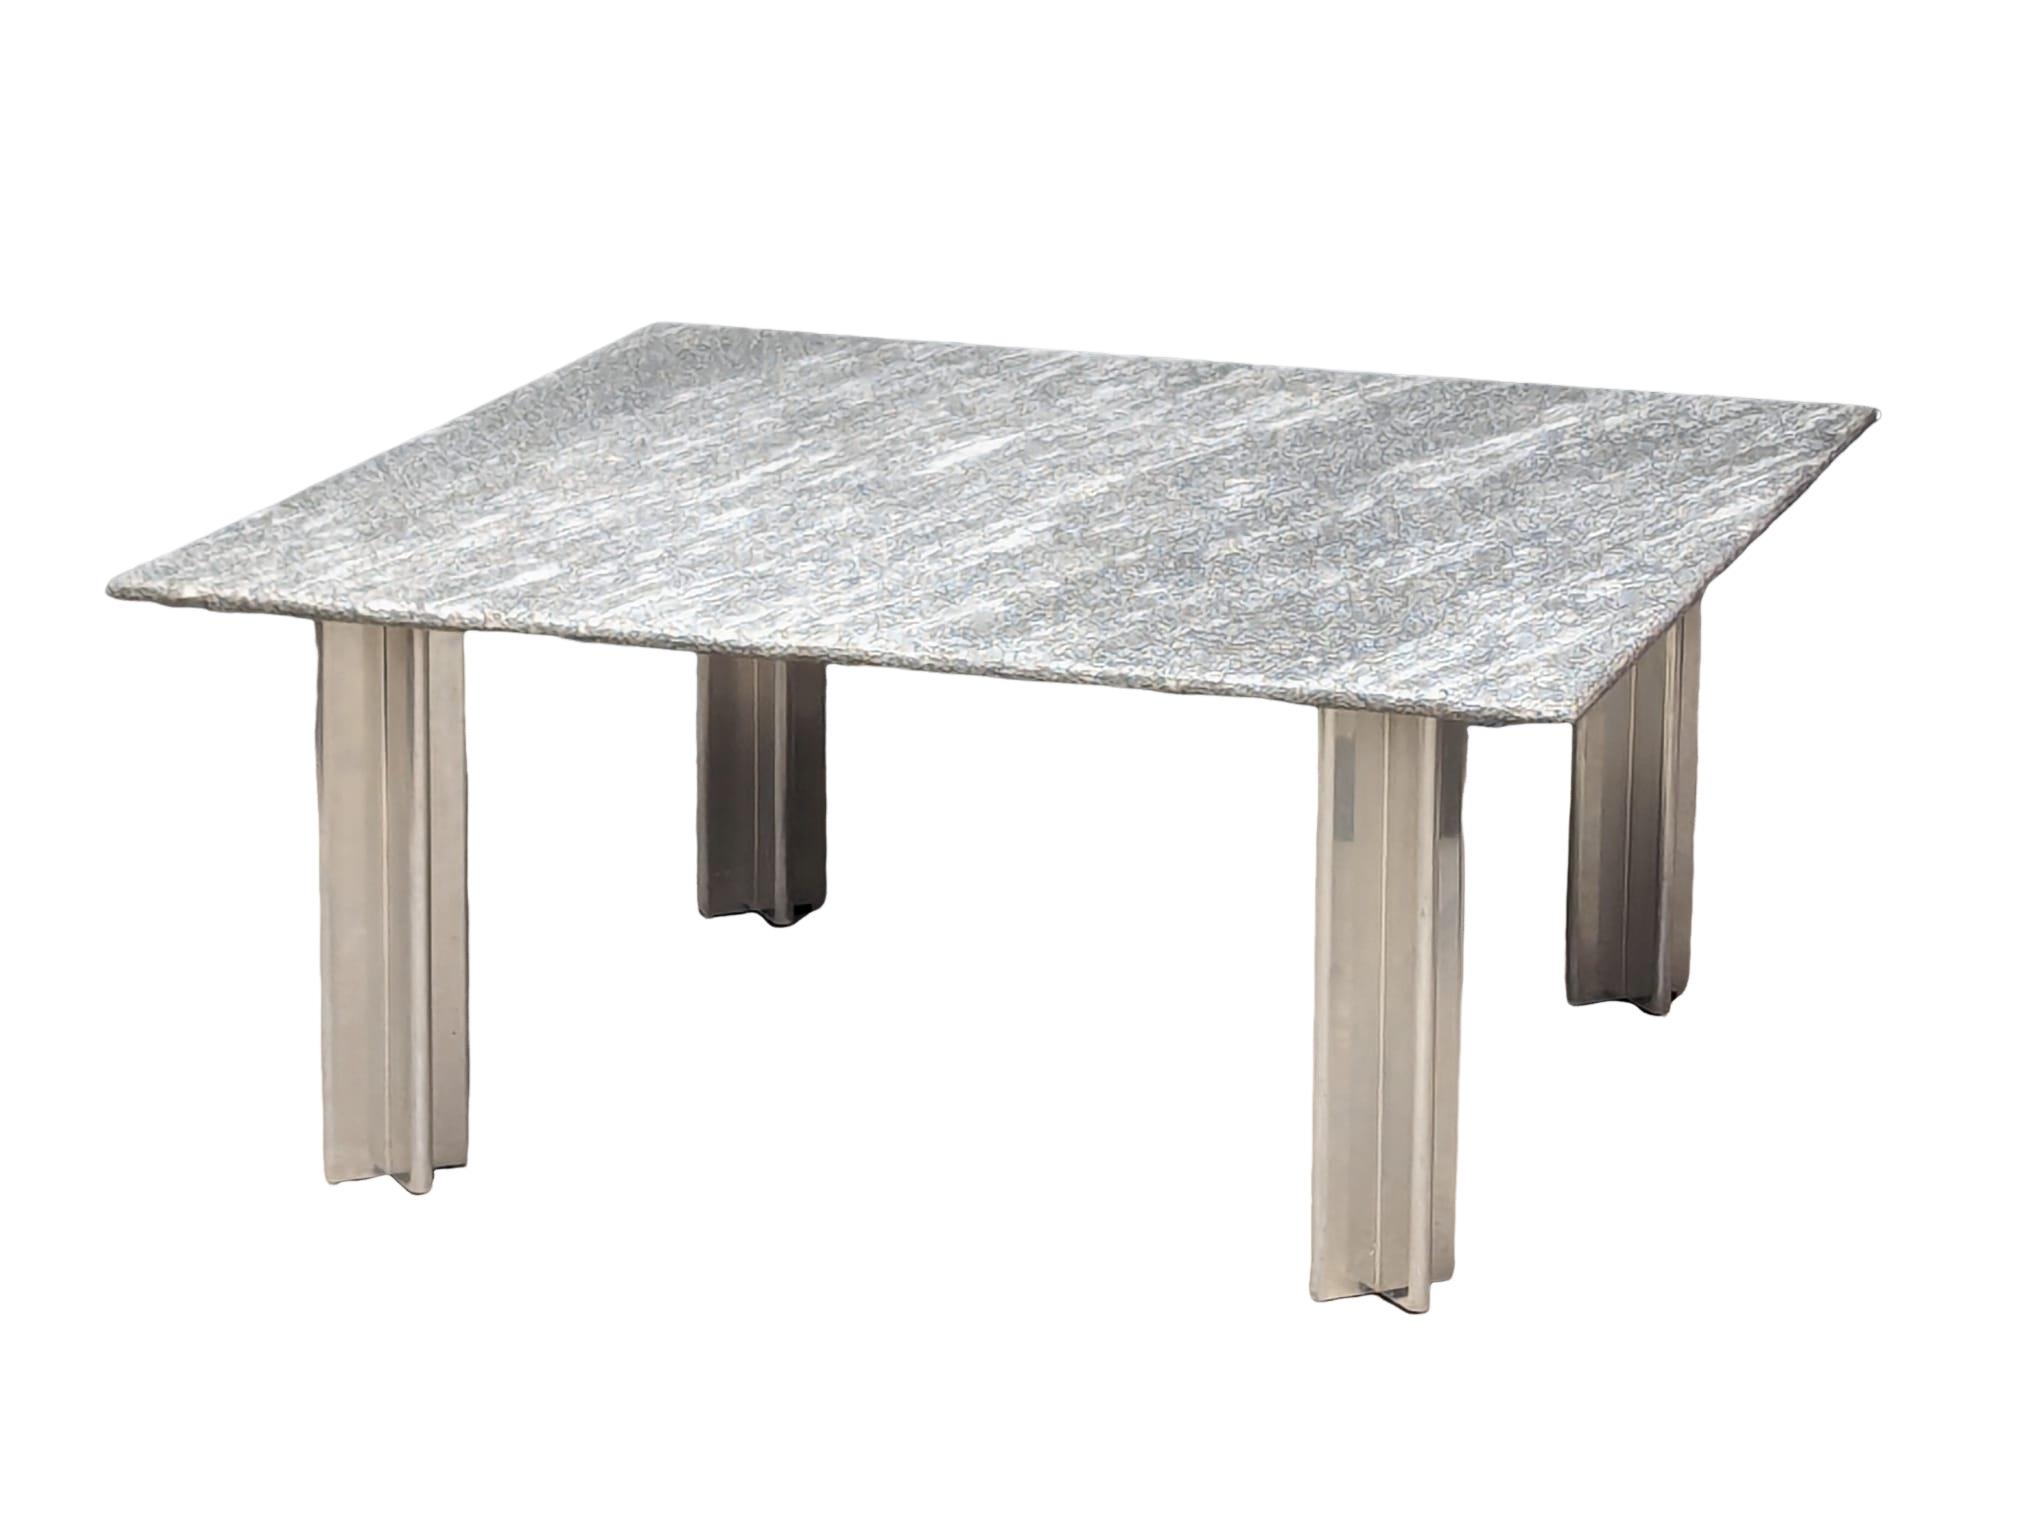 A Zanotta granite top coffee table on alloy supports, 90cm x 90cm x 41cm